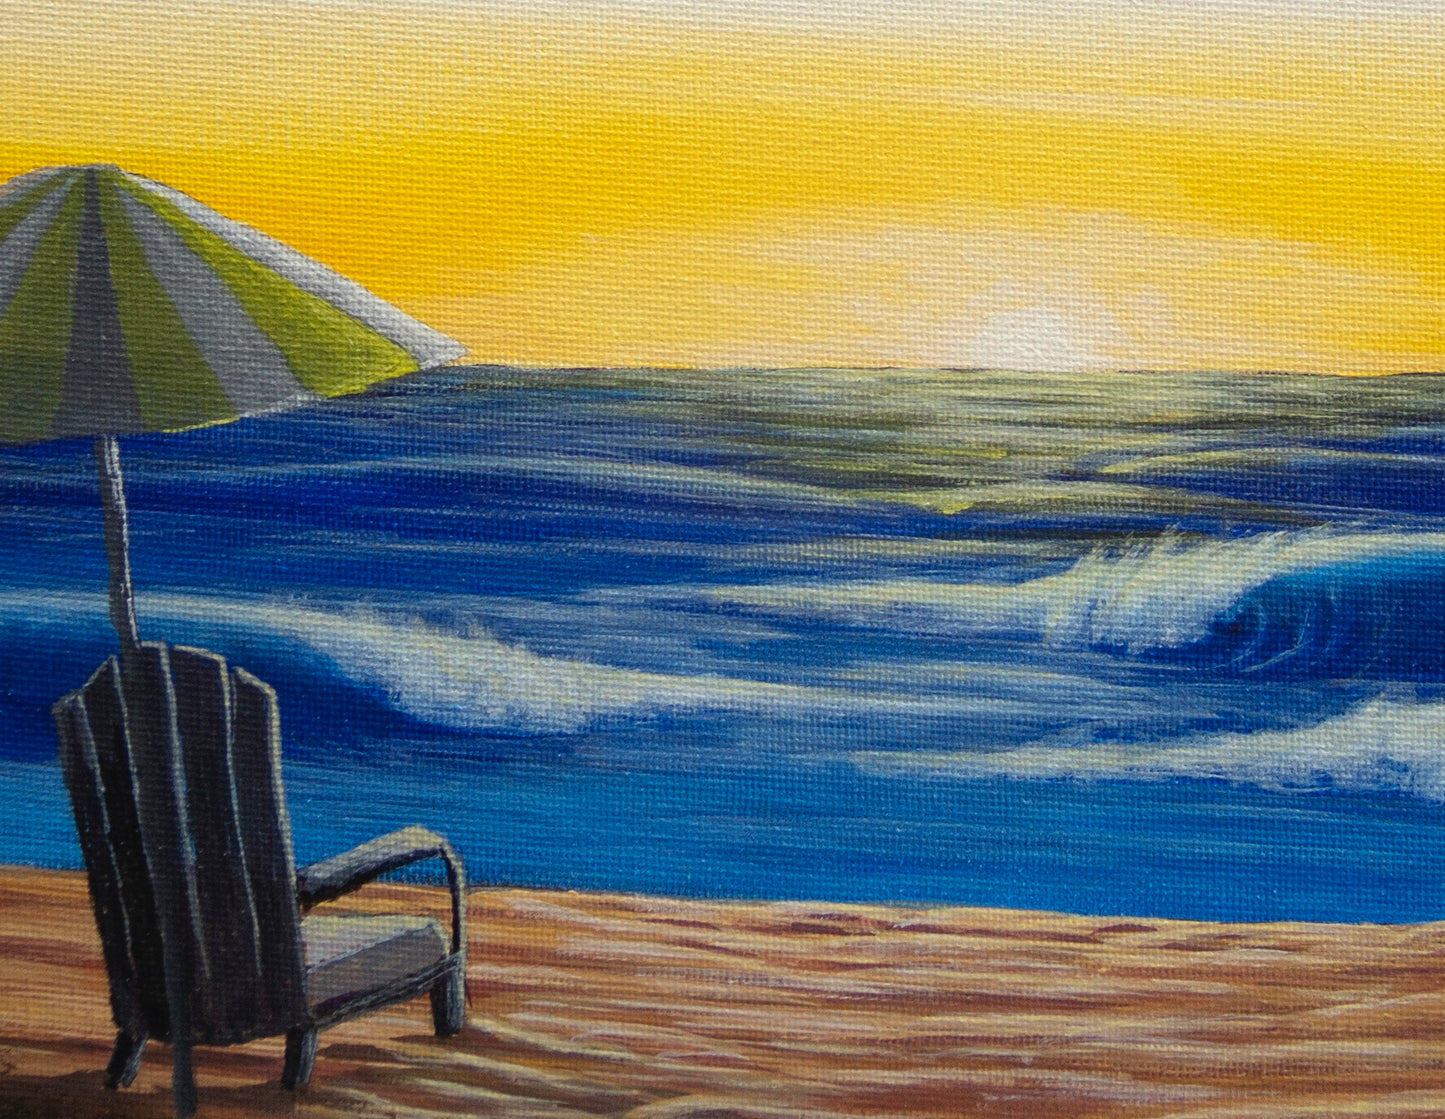 Sunrise at the Beach- Original Painting